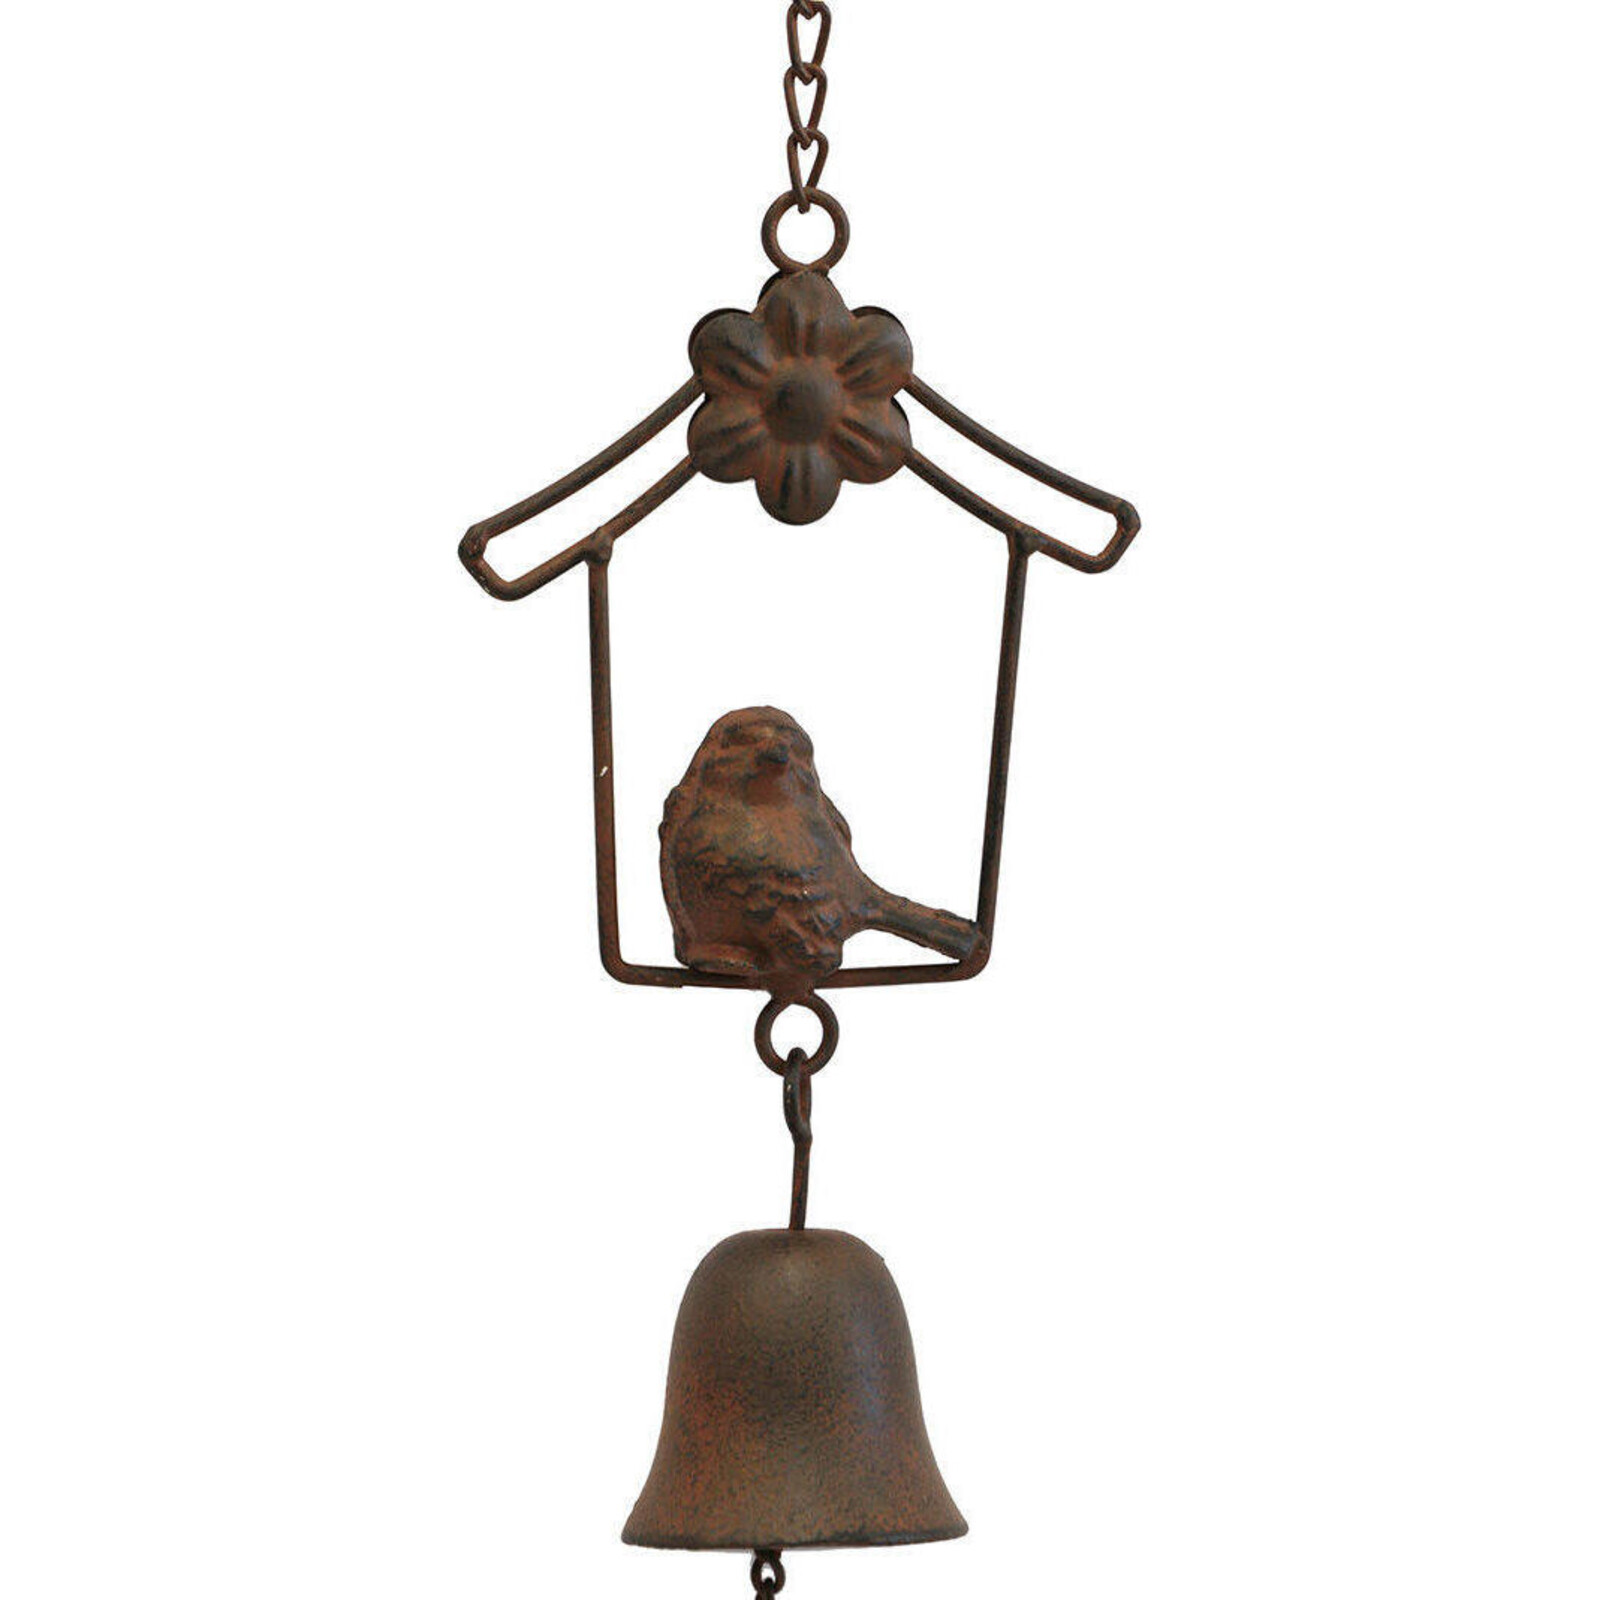 Hanging Bell Birdhouse